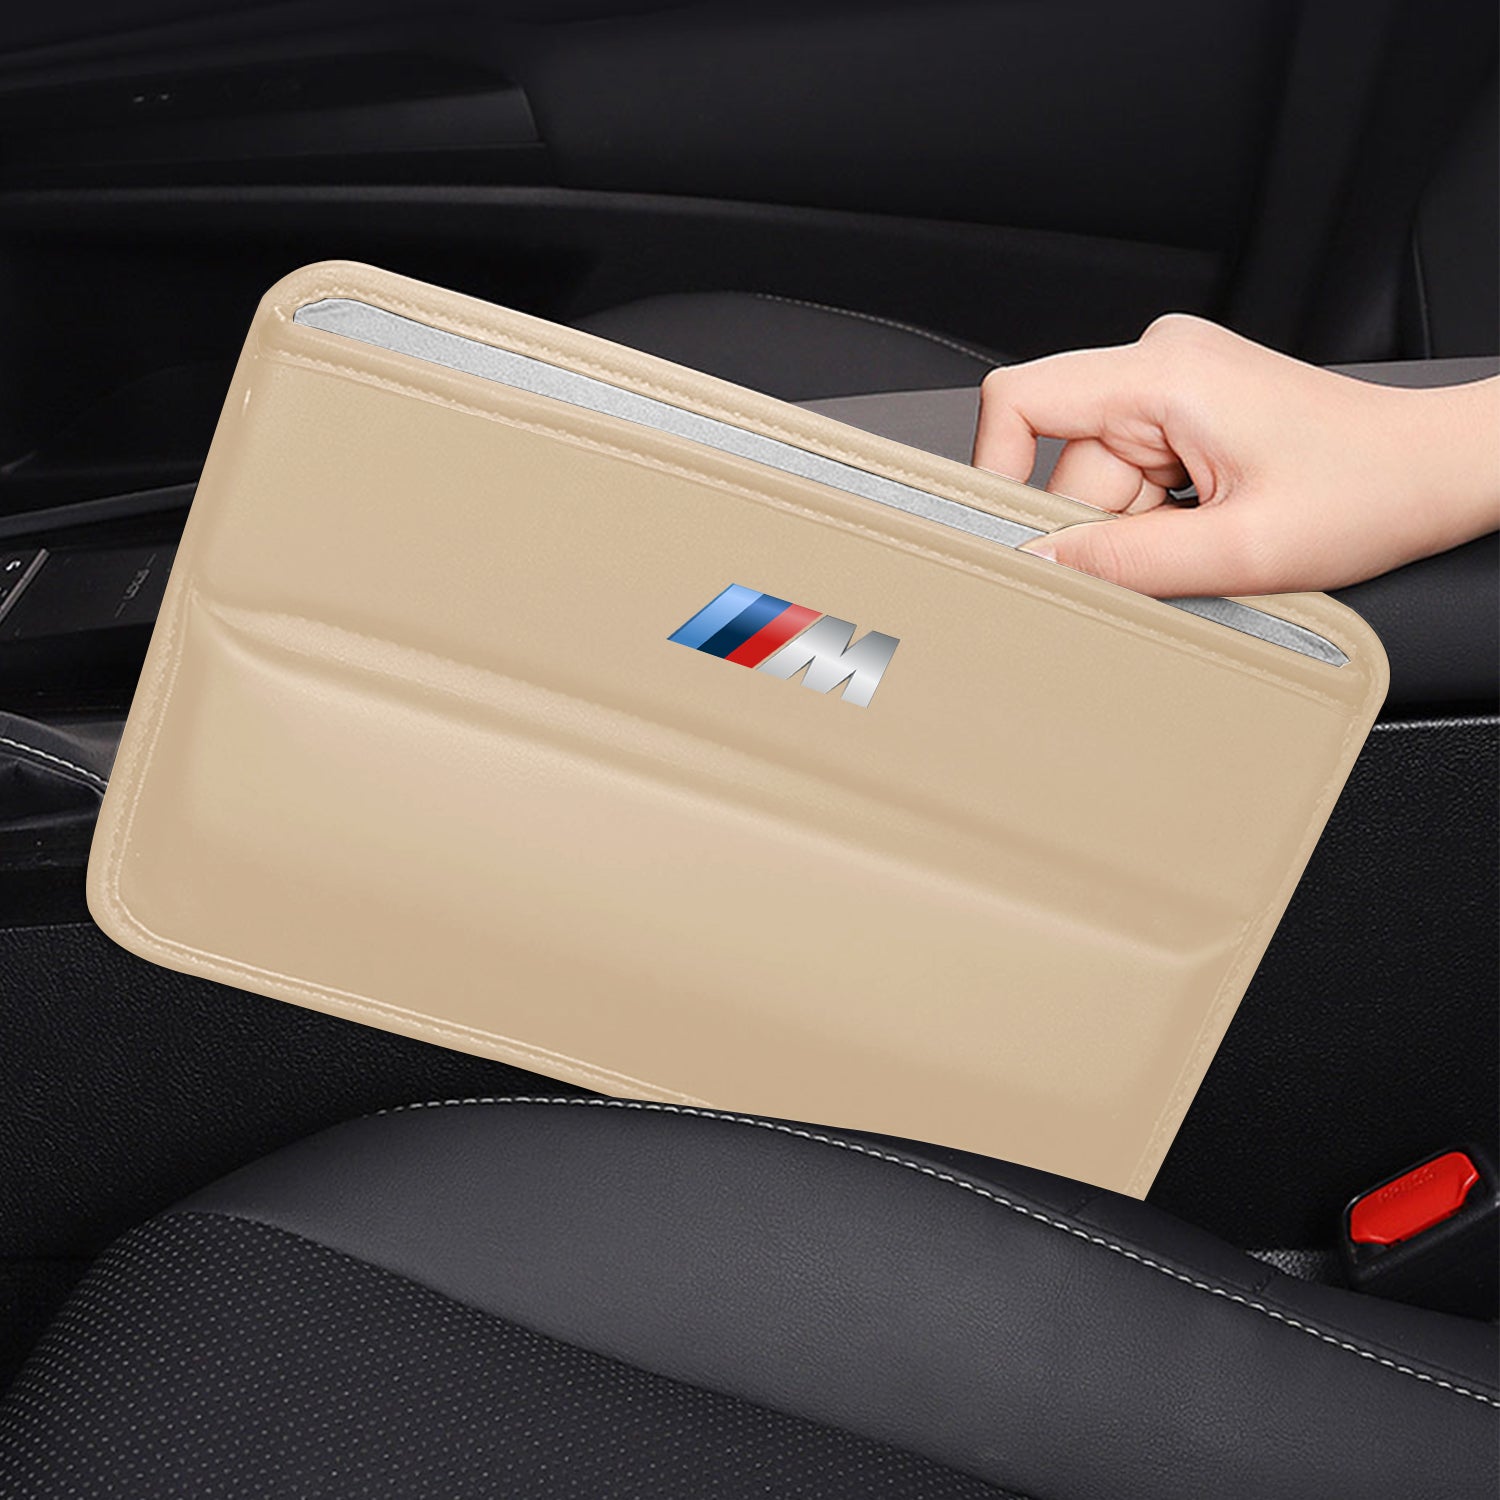 Car Seat Gap Filler for BMW Car Accessories,Car Seat Crevice Storage Box,  PU Leather Car Side seat Gap Filler with Cup Holder for BMW X5 X3 X4 X6,  for